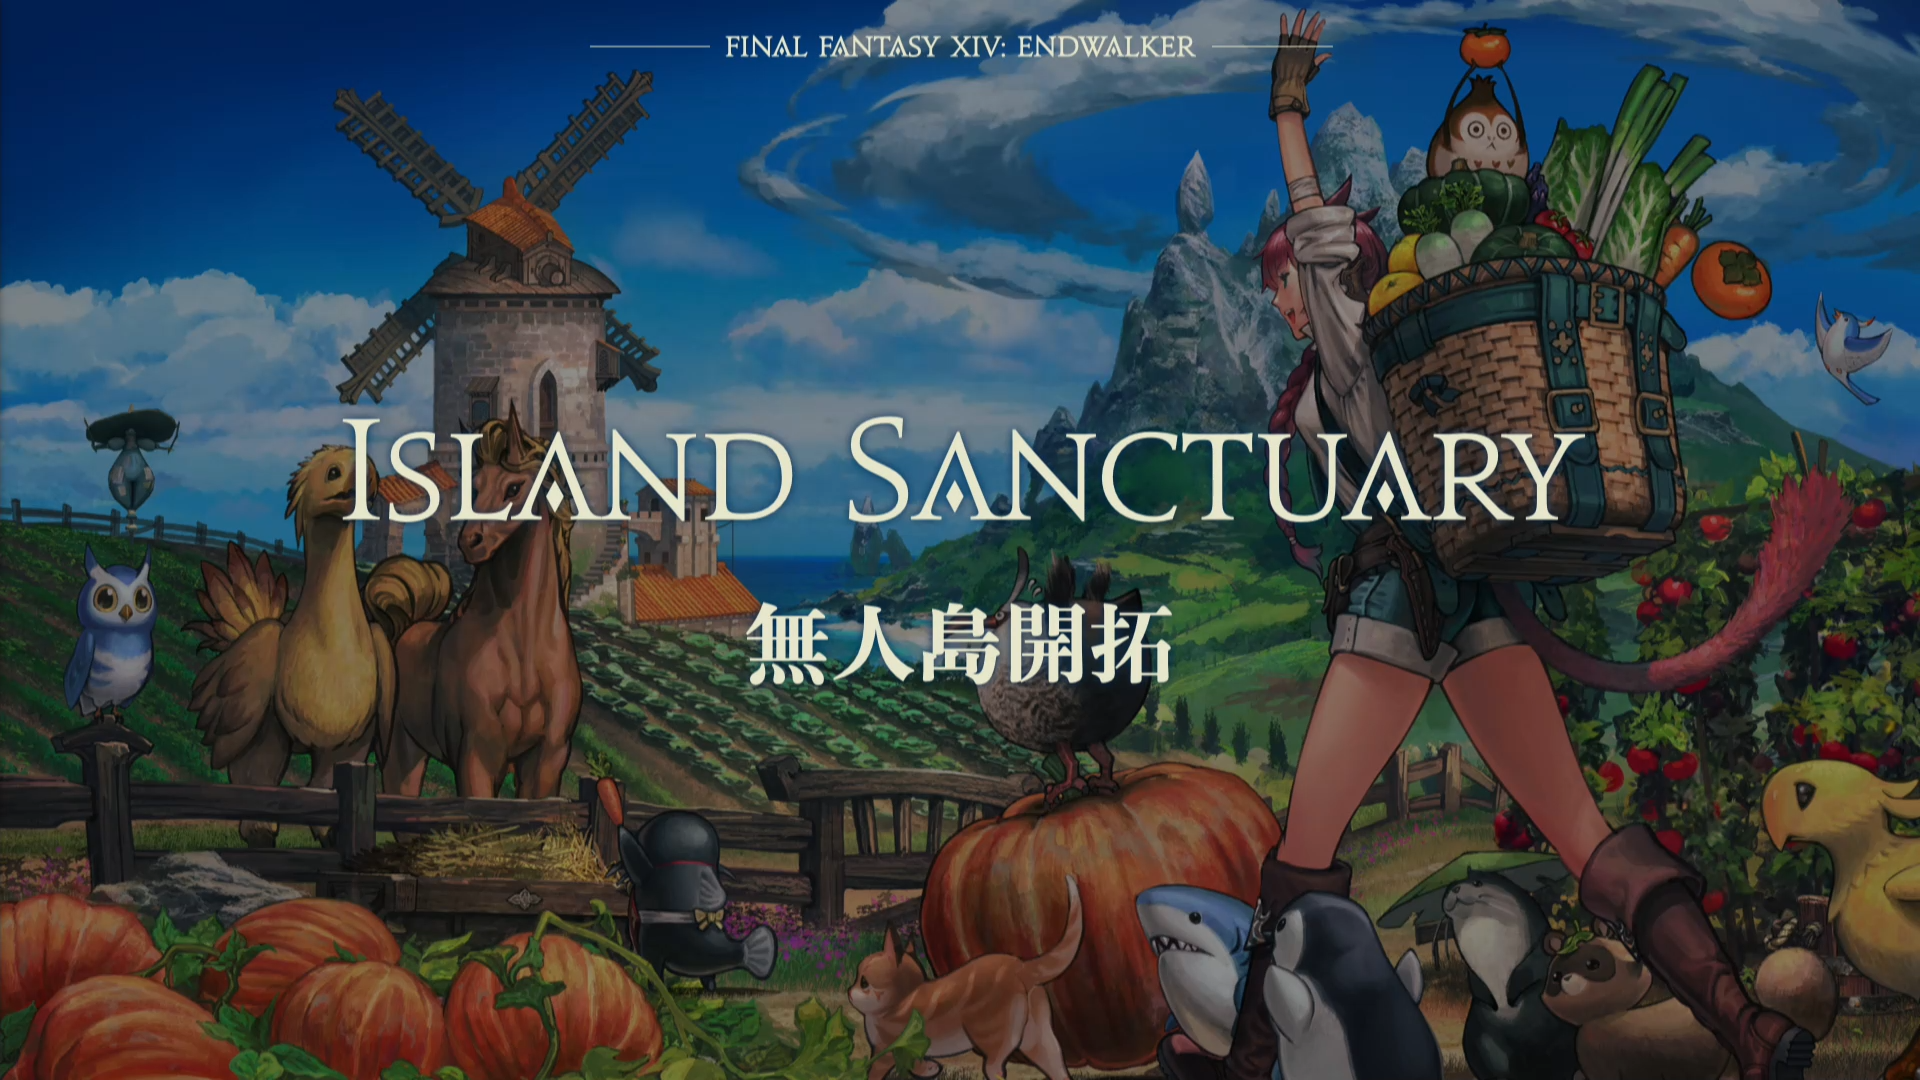 FFXIV 6.0 Endwalker: Island Sanctuary